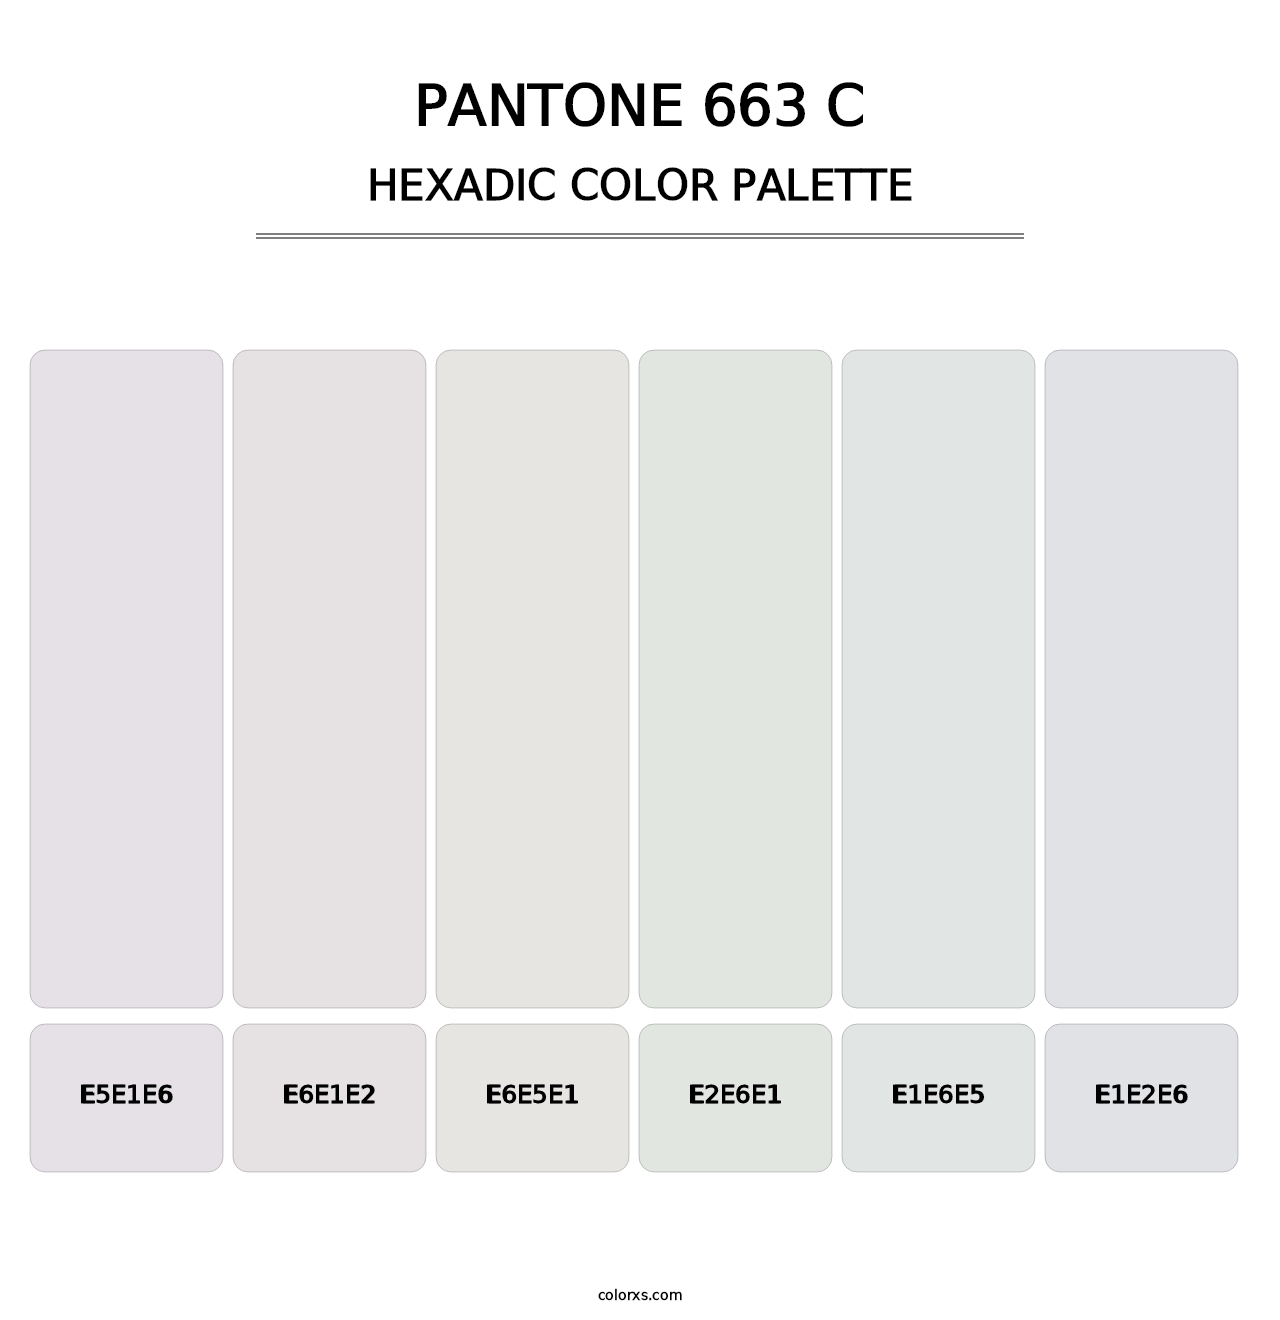 PANTONE 663 C - Hexadic Color Palette